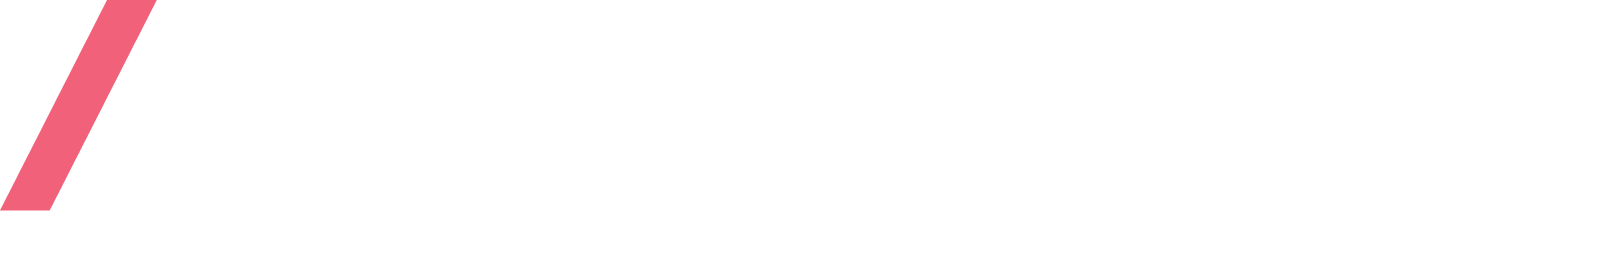 Thoughtworks
 logo large for dark backgrounds (transparent PNG)